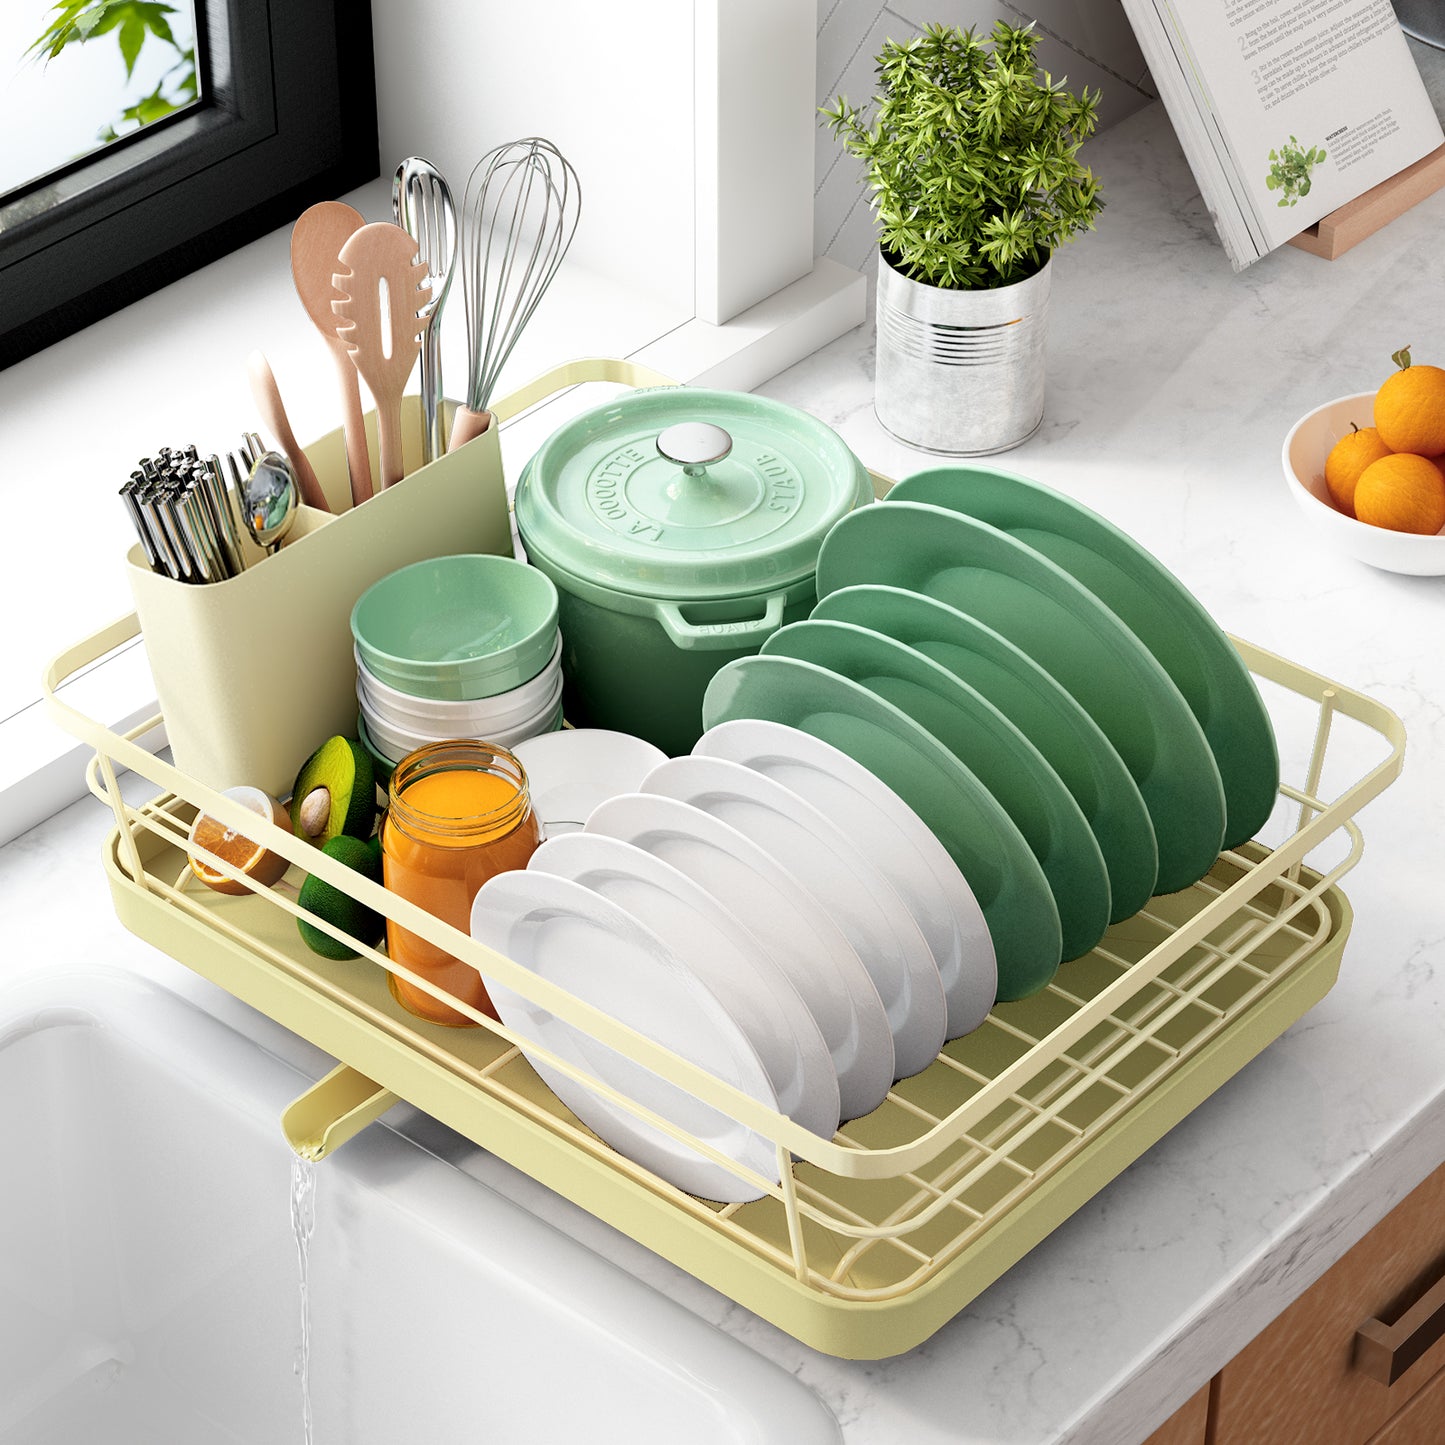 Kitsure Large Dish Drying Rack - Extendable Rack, Multifunctional